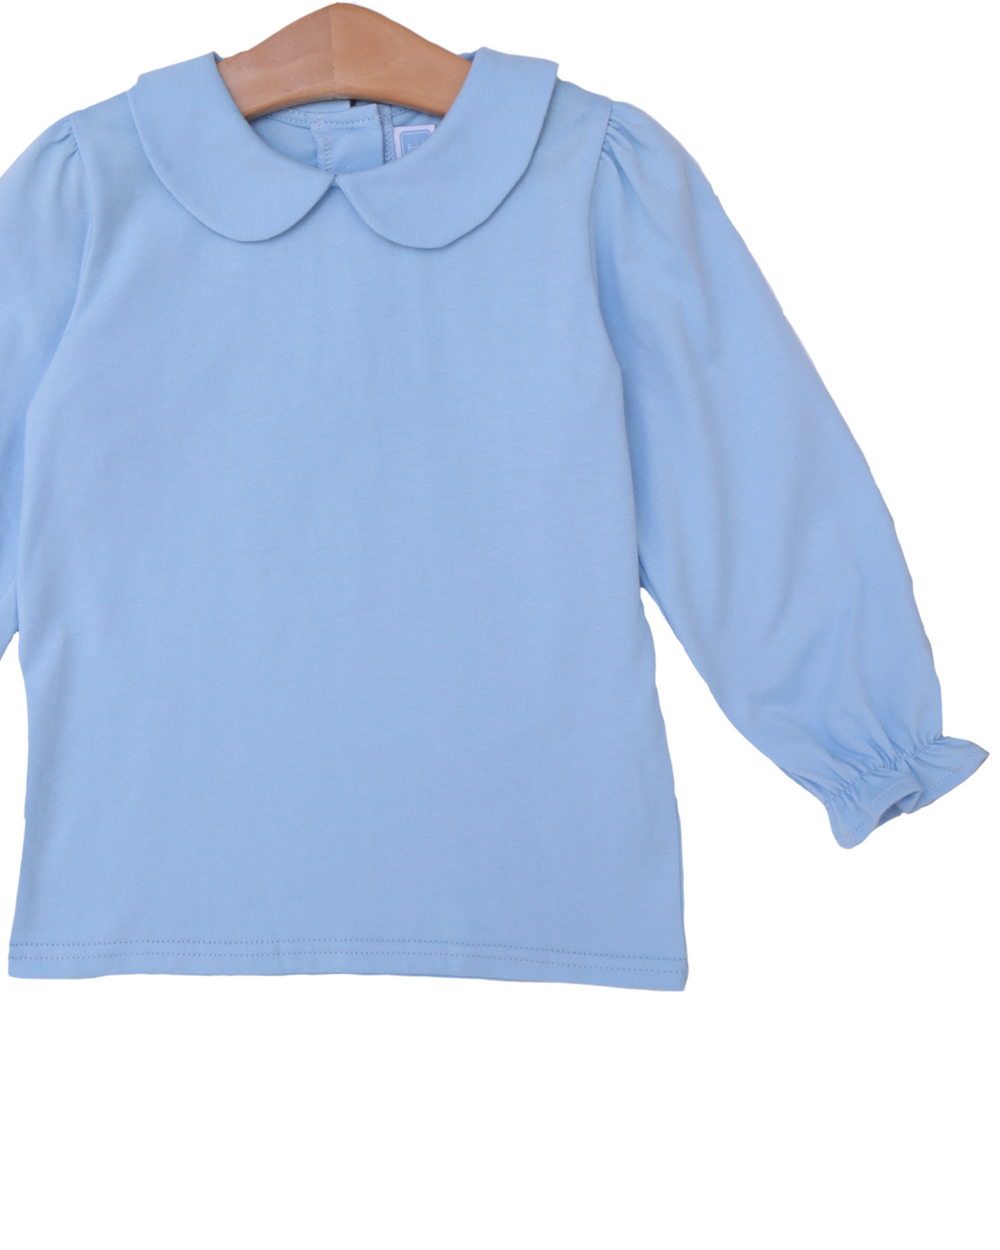 Peter Pan Collar Girls LS Shirt- Light Blue, close up